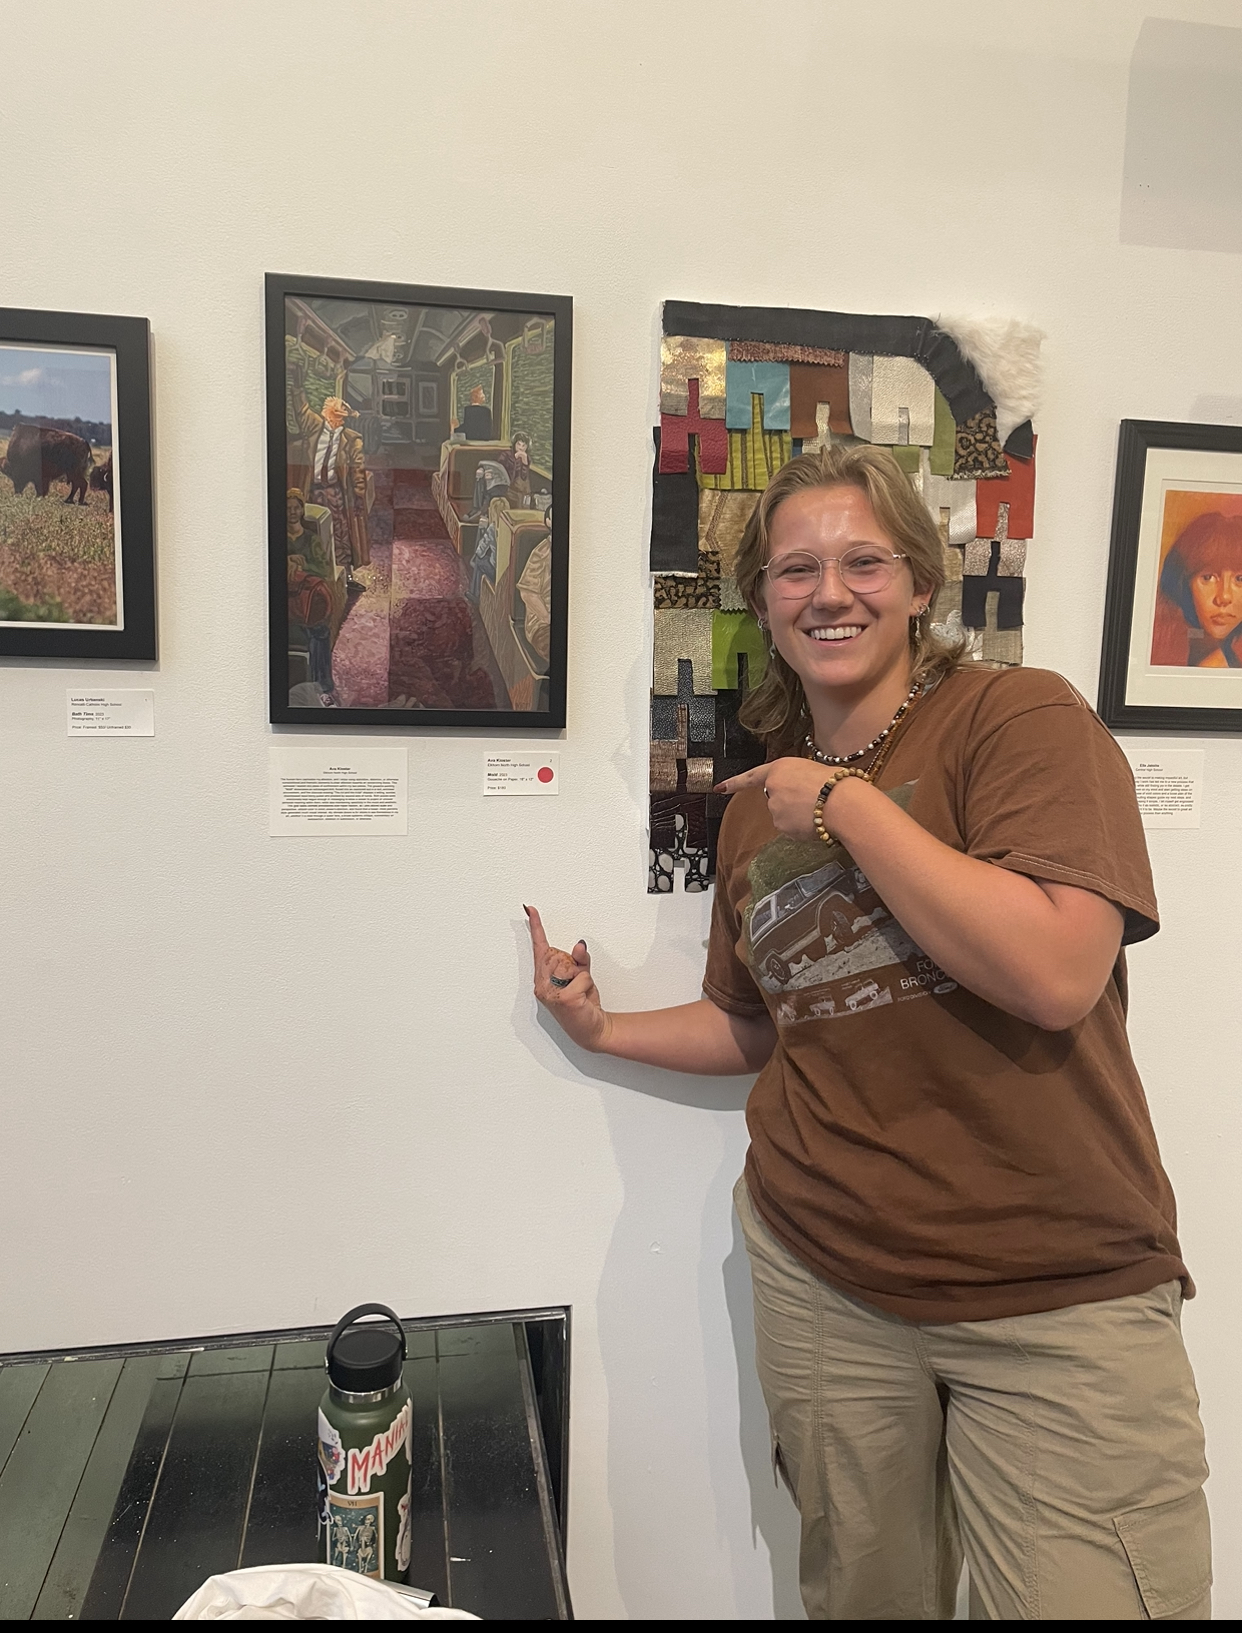 Junior Ava Kloster poses next to her artwork